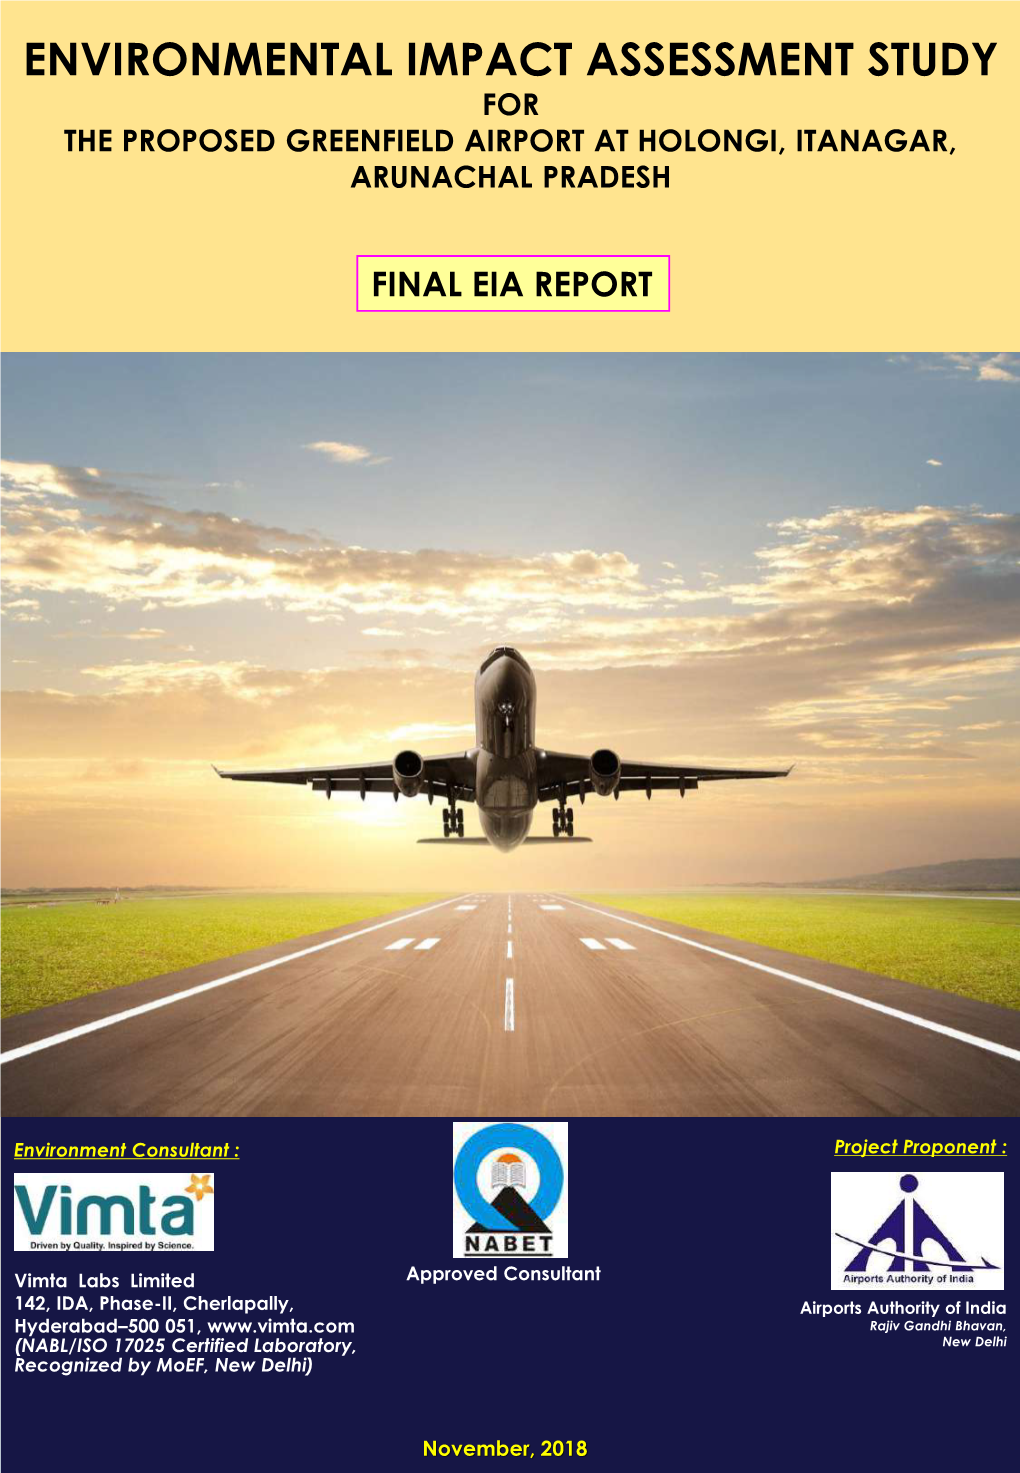 Environmental Impact Assessment Study for the Proposed Greenfield Airport at Holongi, Itanagar, Arunachal Pradesh